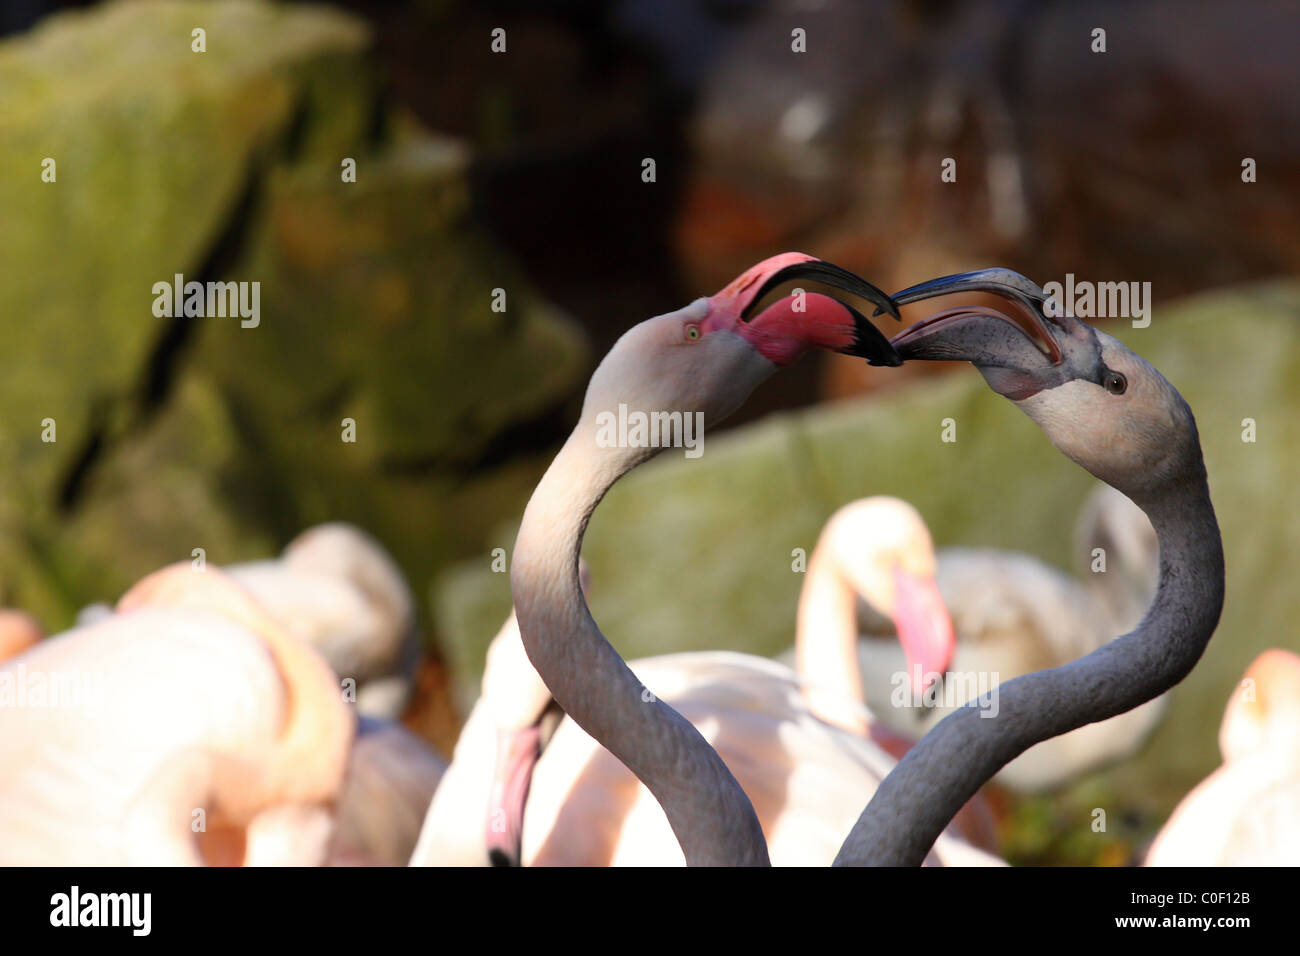 Flamingo, Closeup of couple of flamingos in love Stock Photo